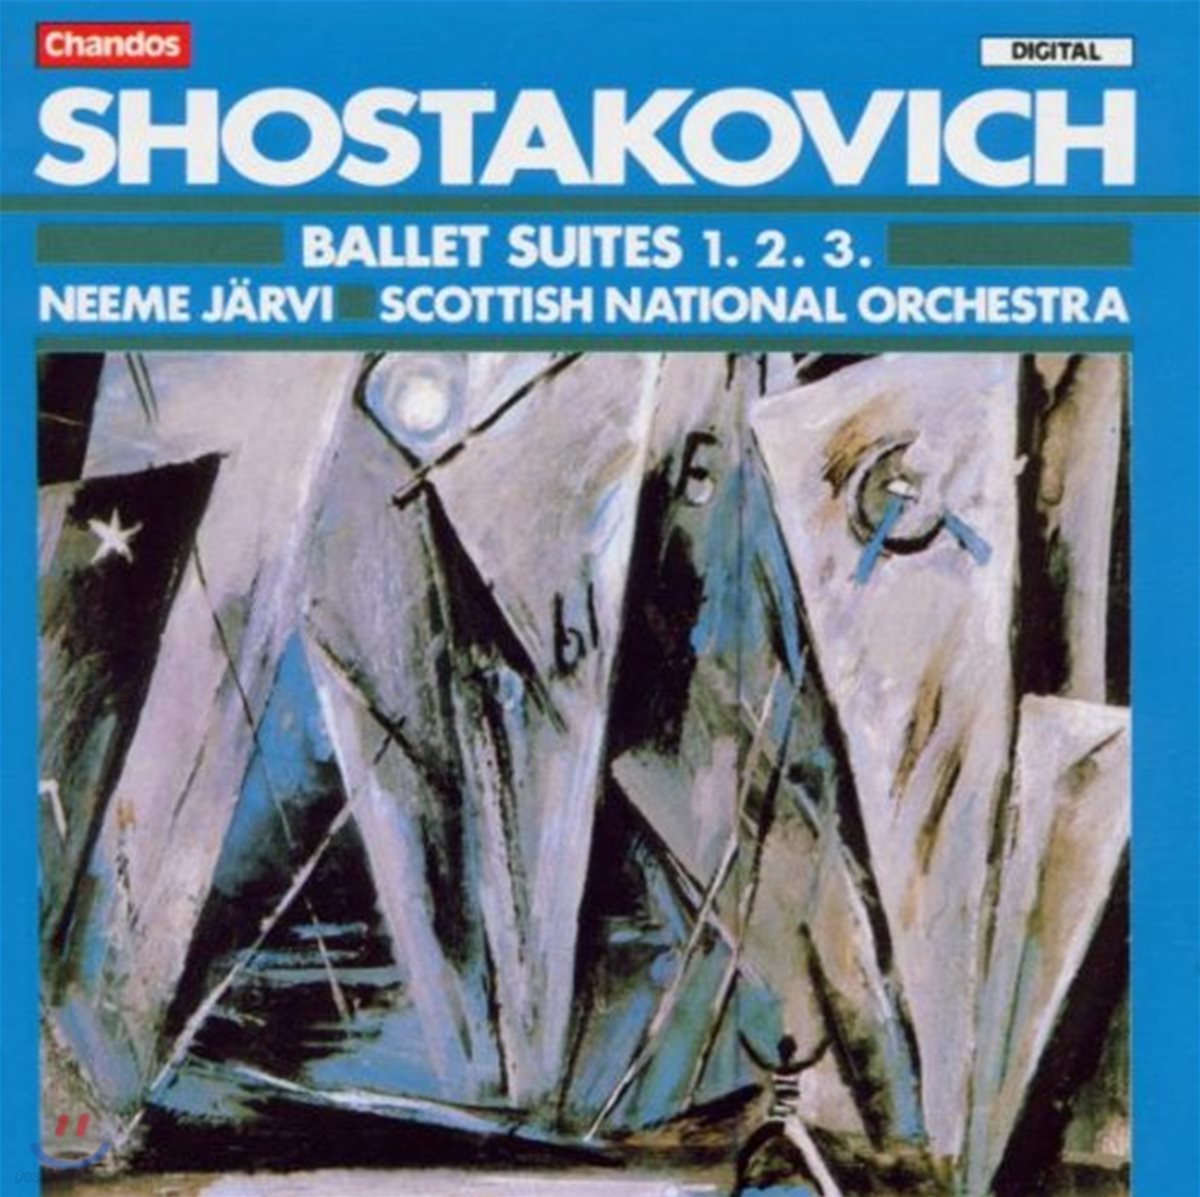 Neeme Jarvi 쇼스타코비치: 발레 모음곡 1, 2, 3번 - 네메 예르비, 스코틀랜드 국립 오케스트라 (Shostakovich: Ballet Suite Nos. 1, 2, 3)